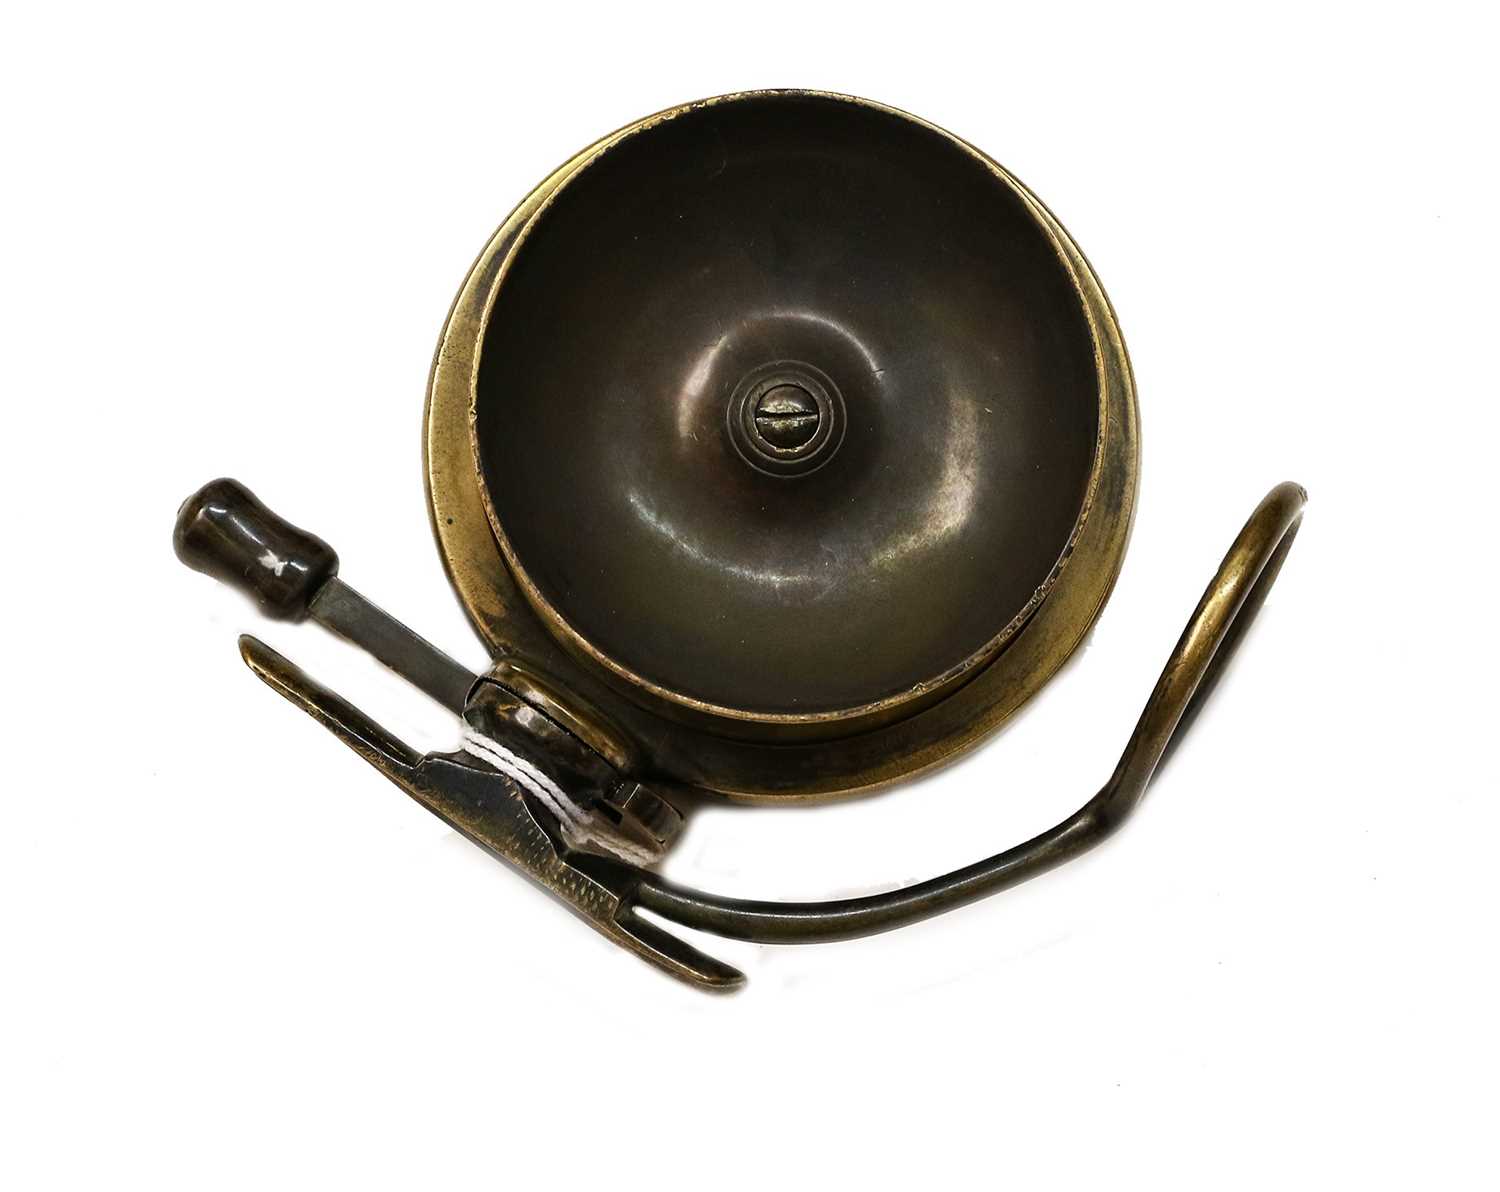 An Early Brass Mallochs 3 1/2" Sidecaster Reel